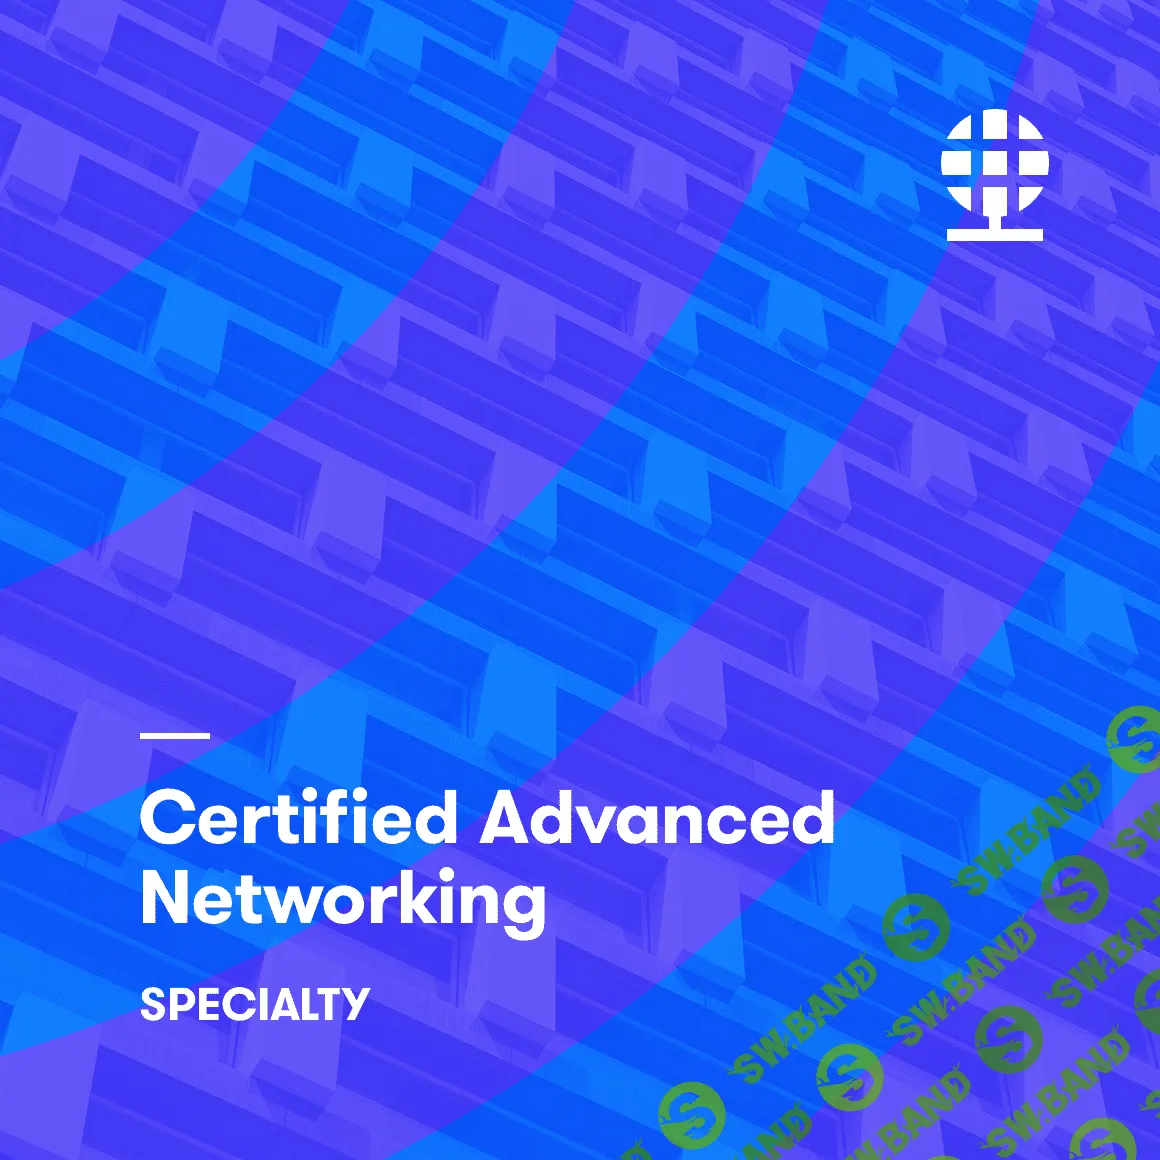 [acloud.guru] AWS Certified Advanced Networking - Specialty 2019